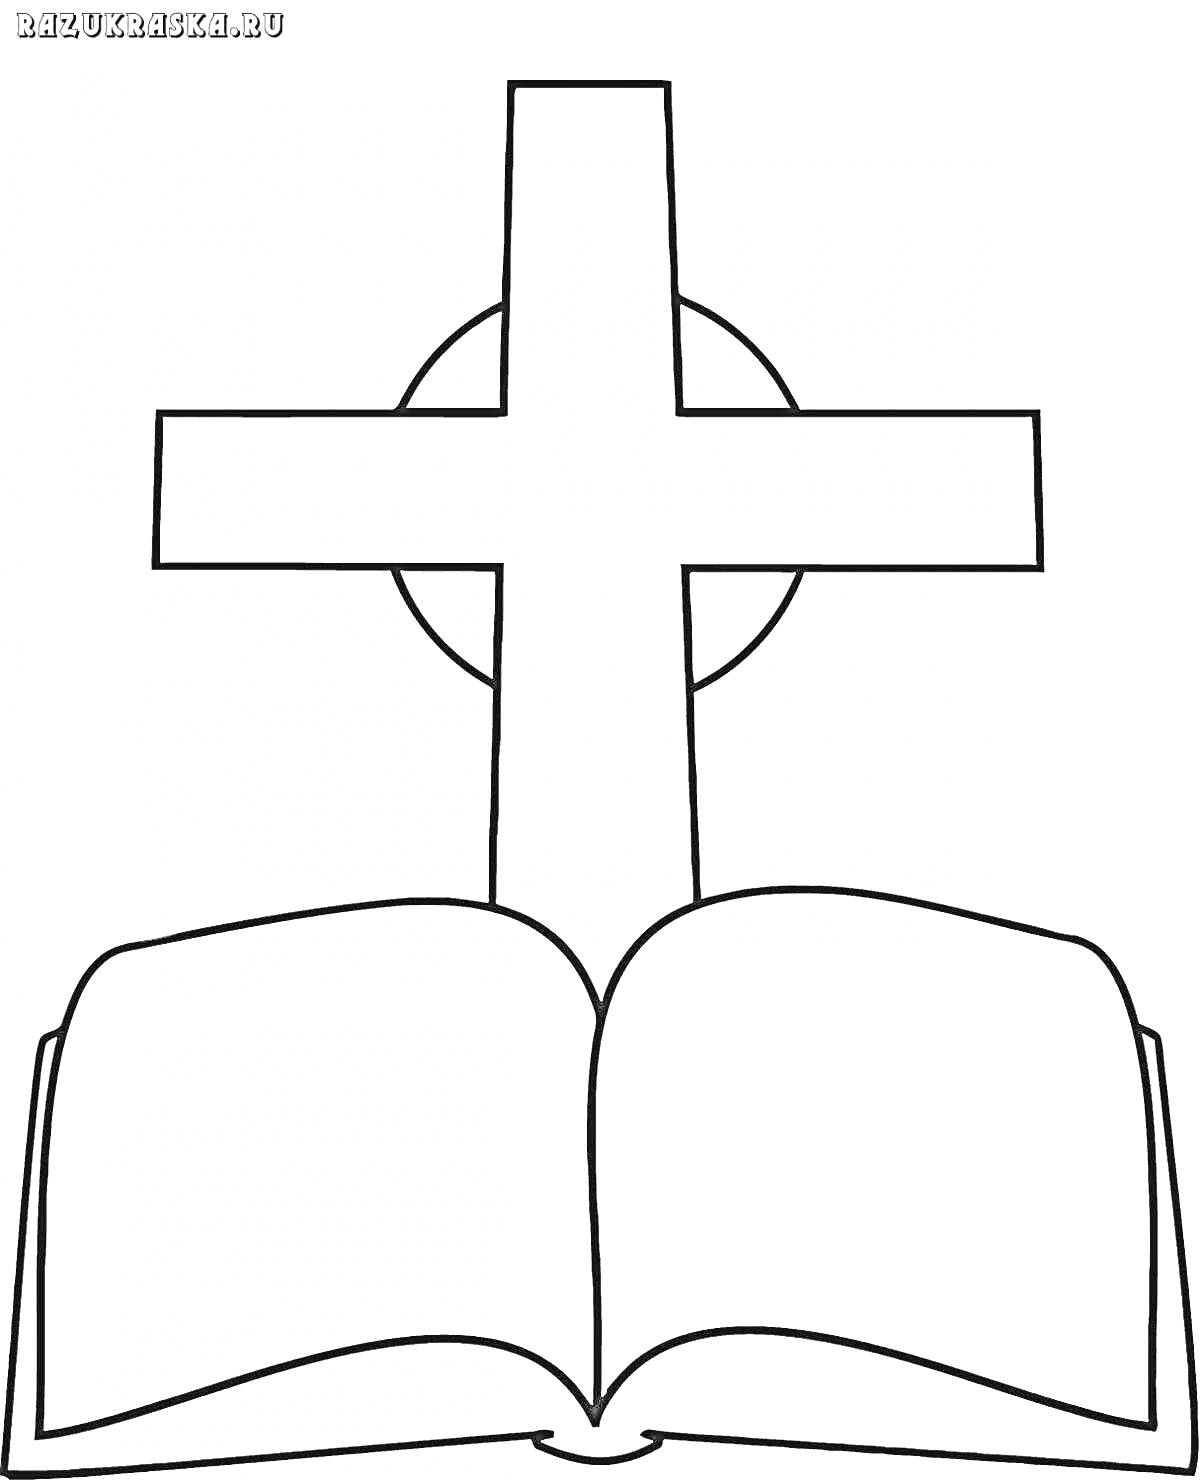 Крест и раскрытая книга на фоне круга